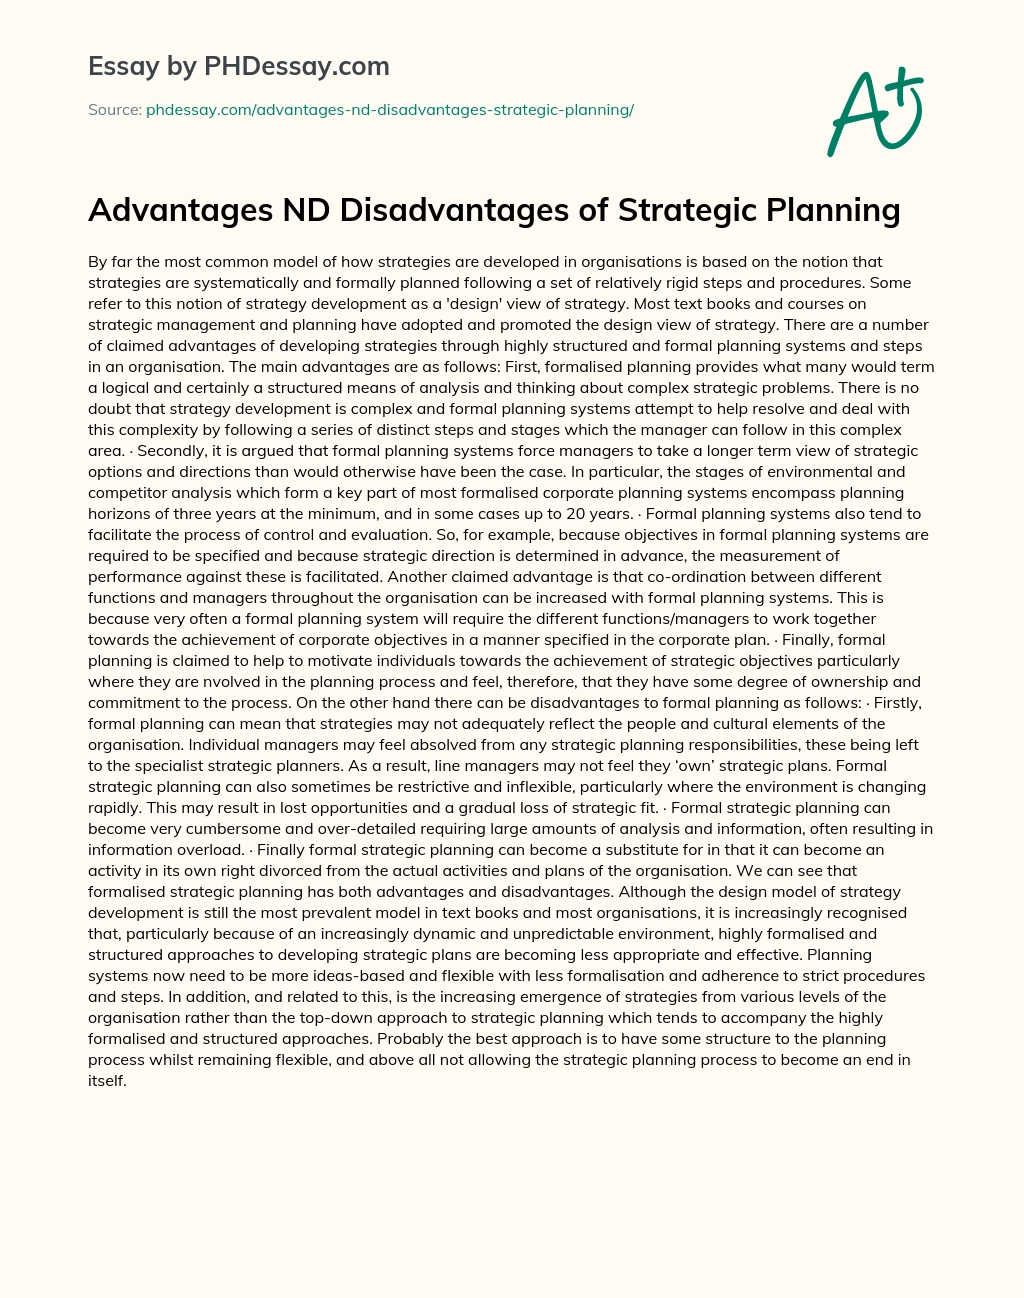 Advantages ND Disadvantages of Strategic Planning essay